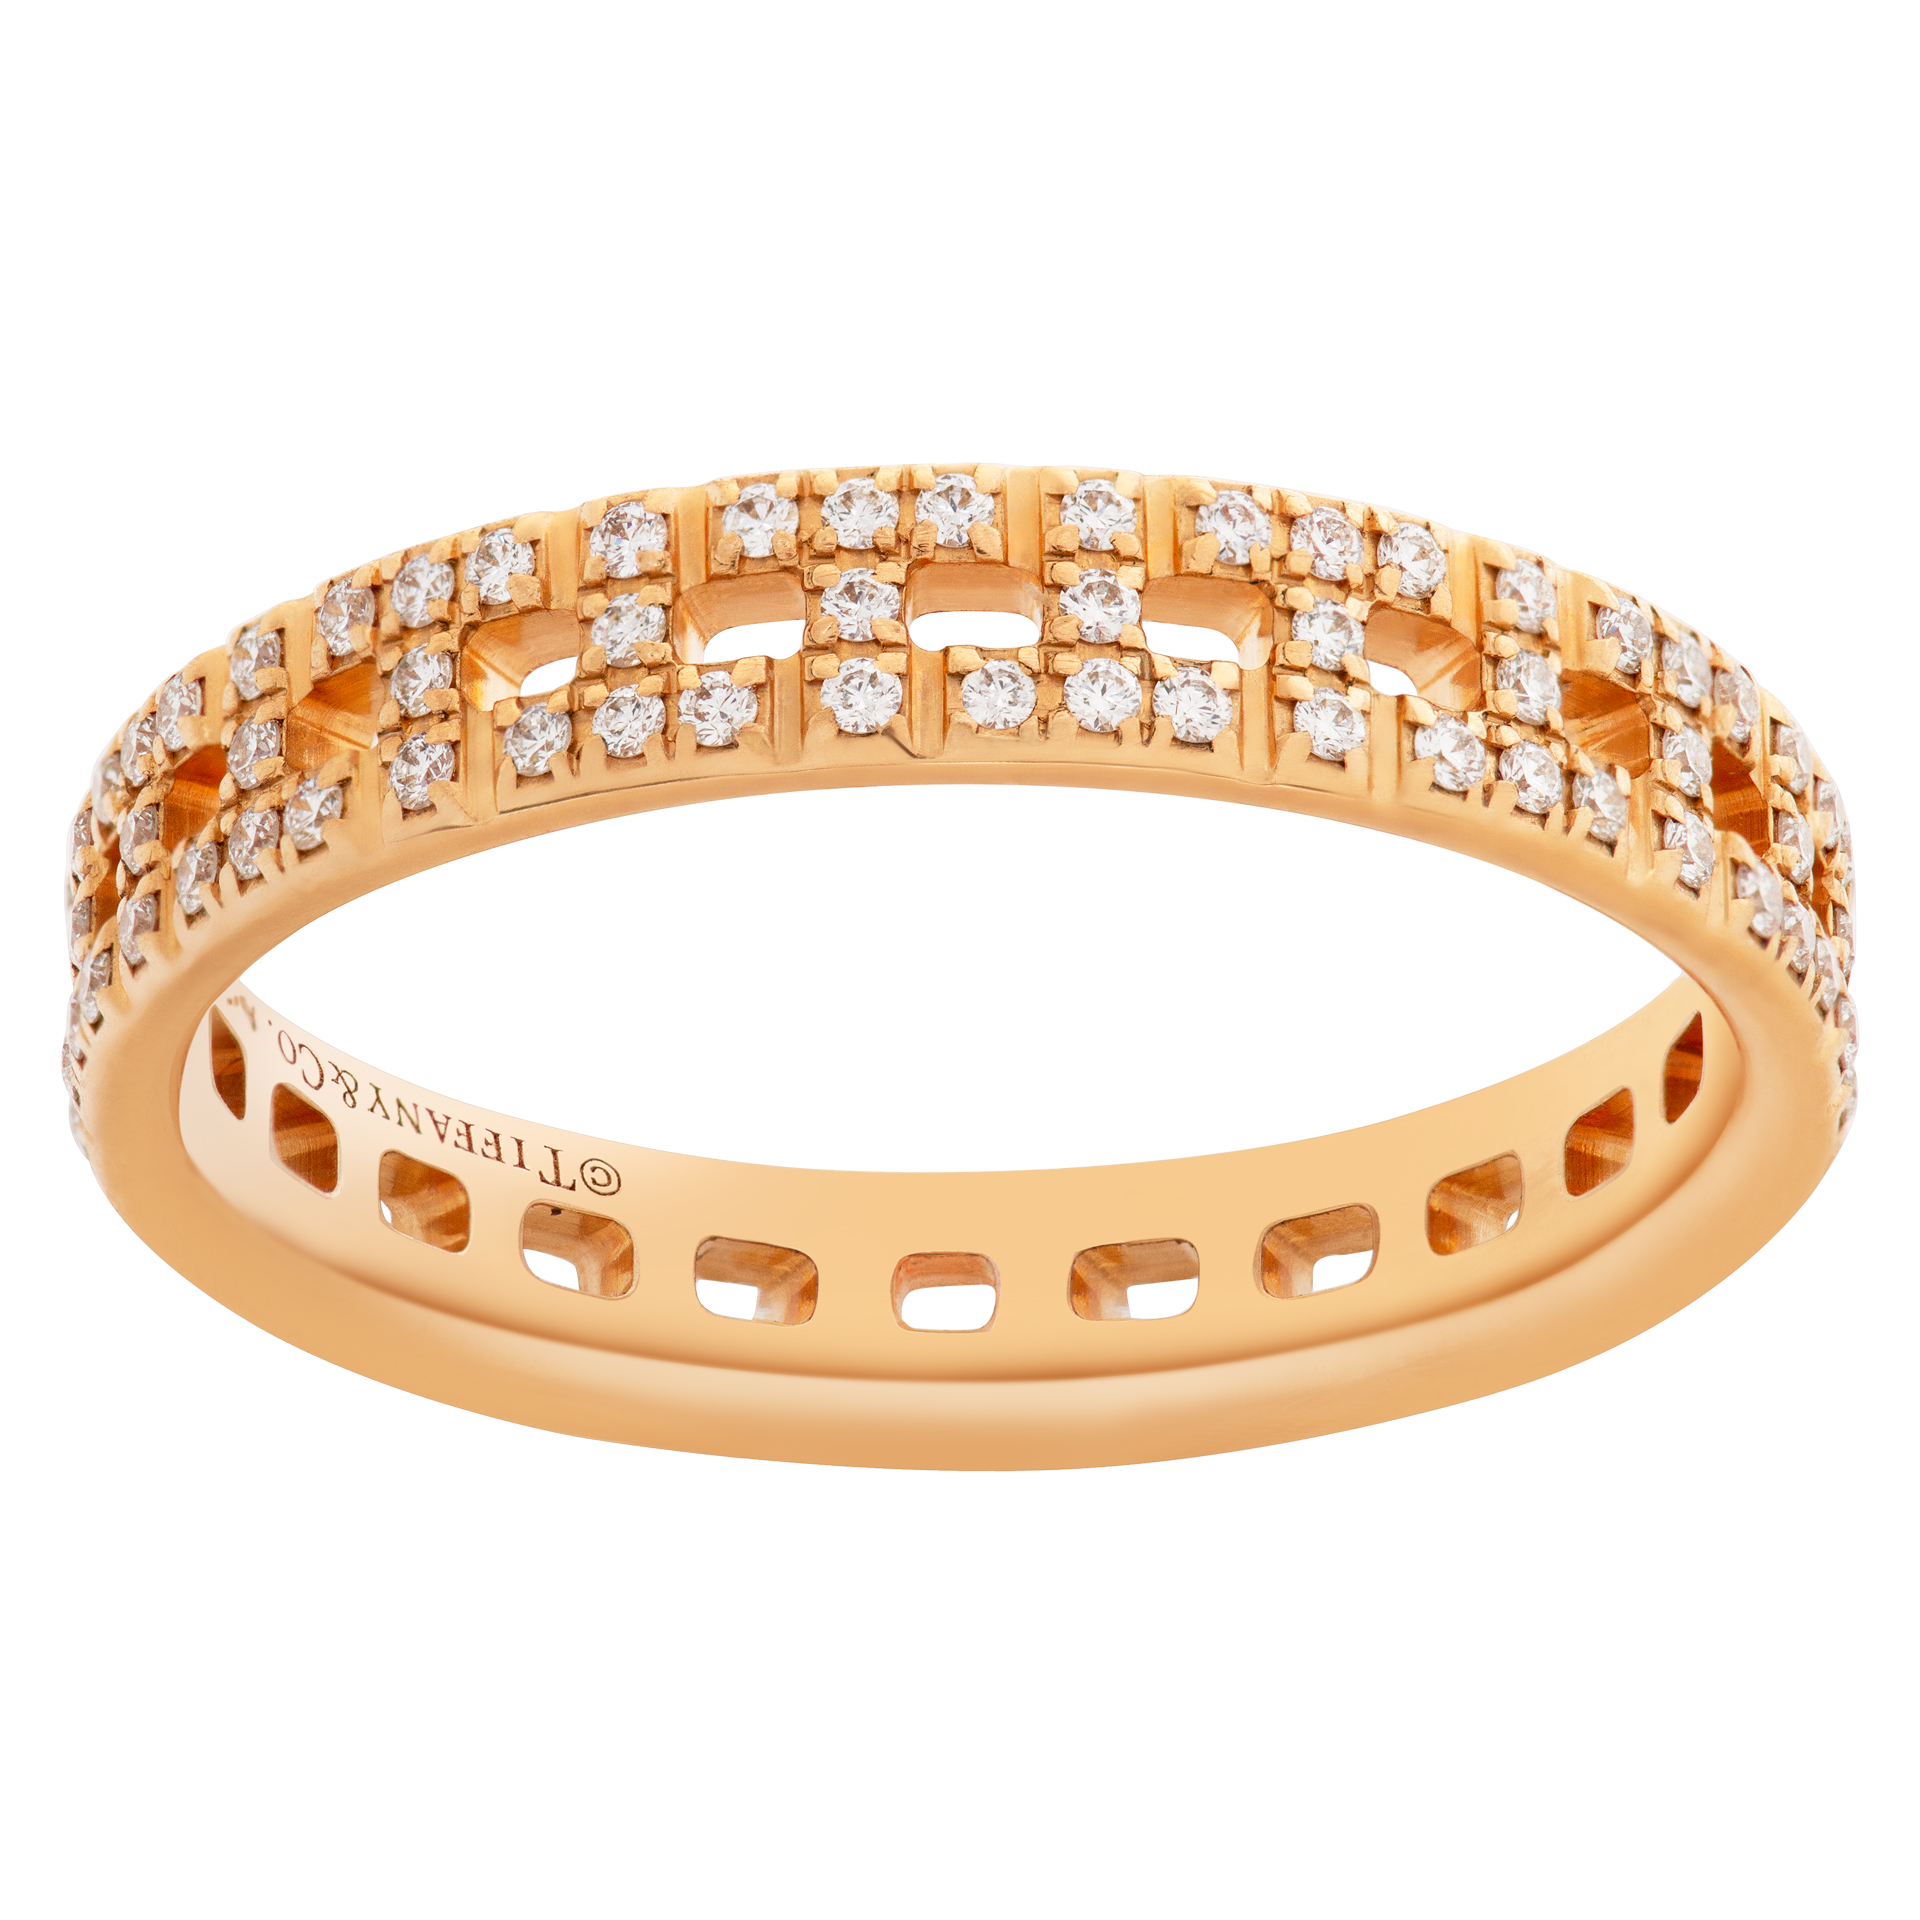 Tiffany & Co. "True Narrow" diamond ring in 18k rose gold